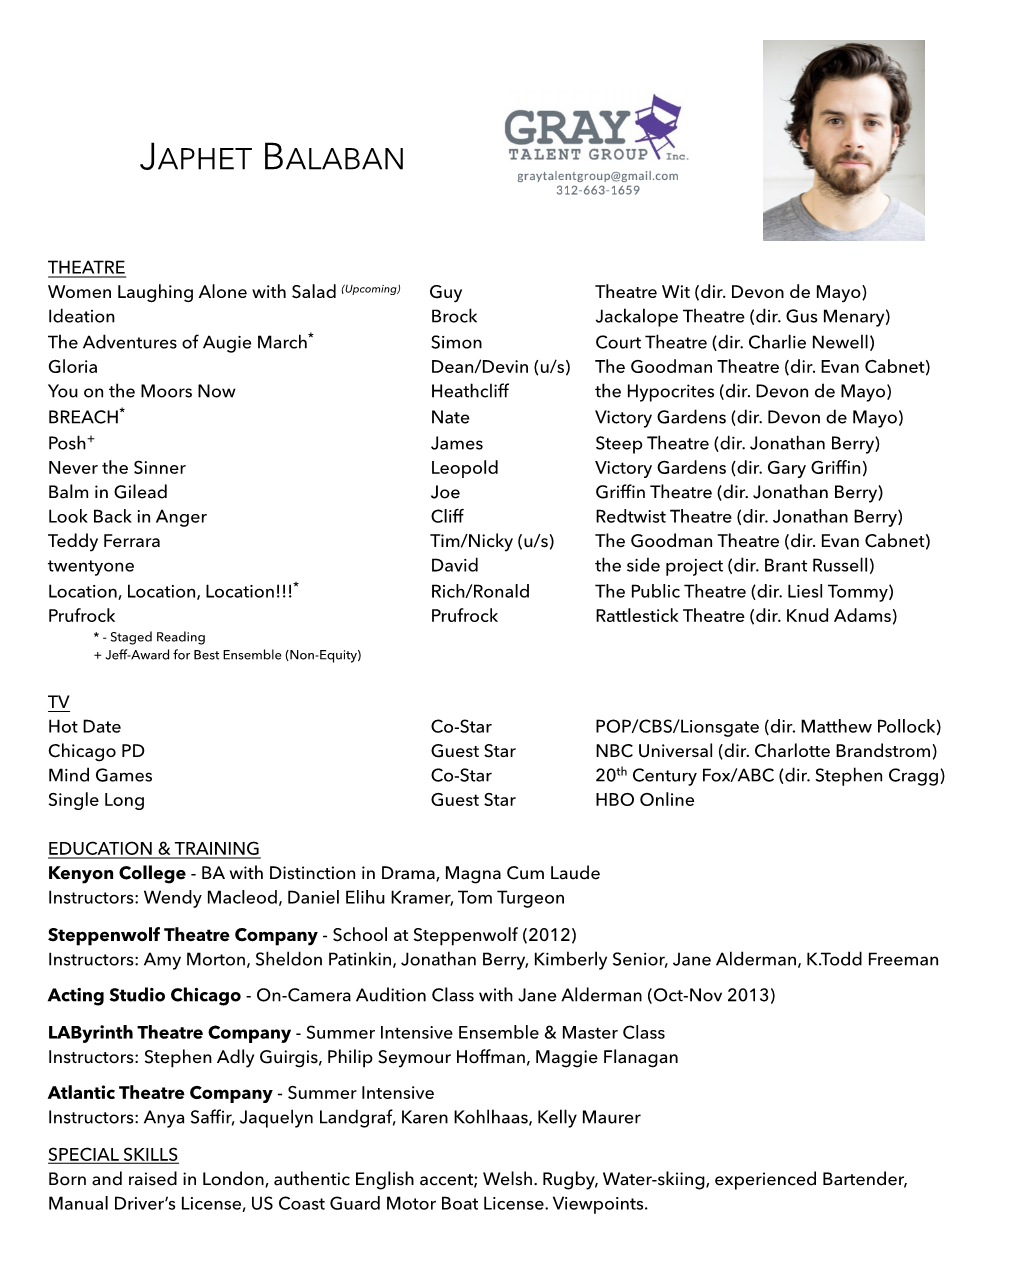 Japhet Balaban Resume W/Picture 8.18